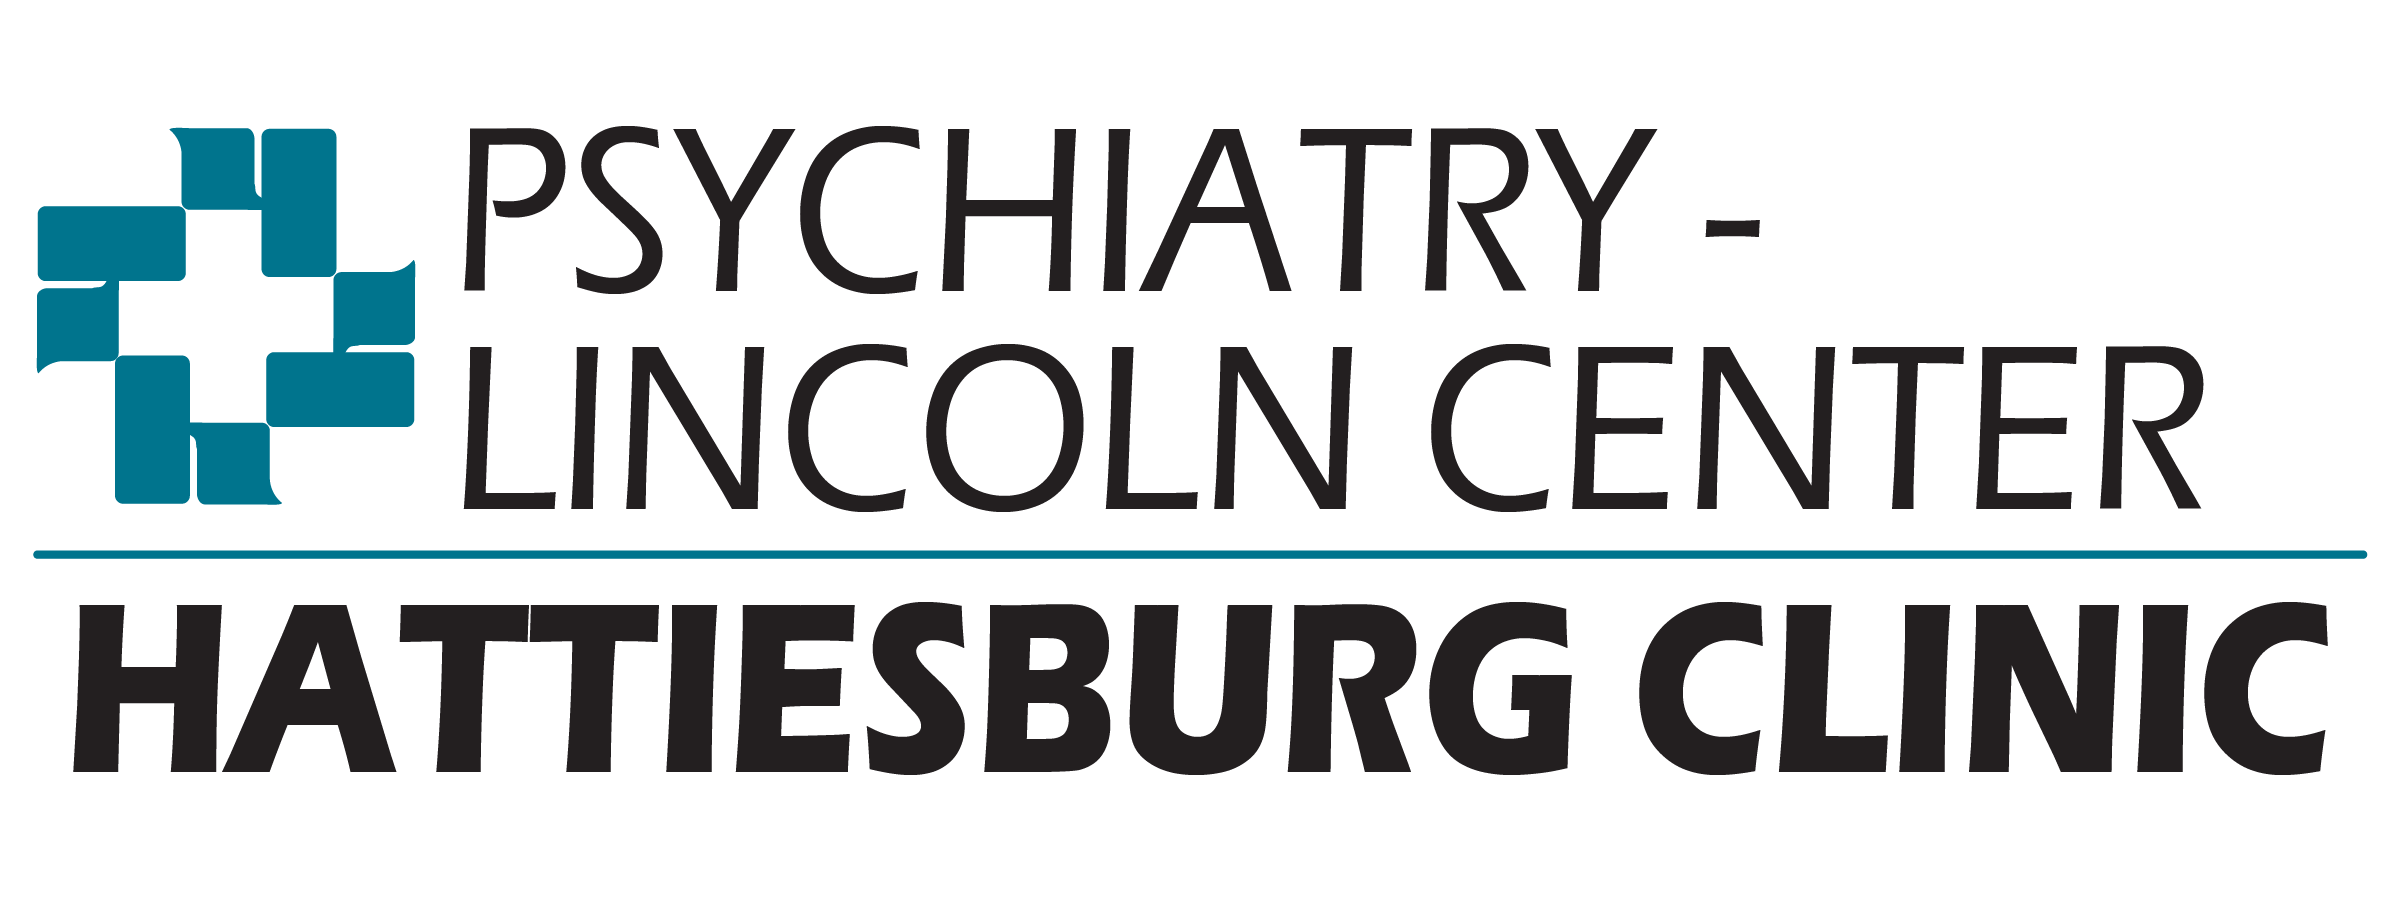 Psychiatry Lincoln Center logo